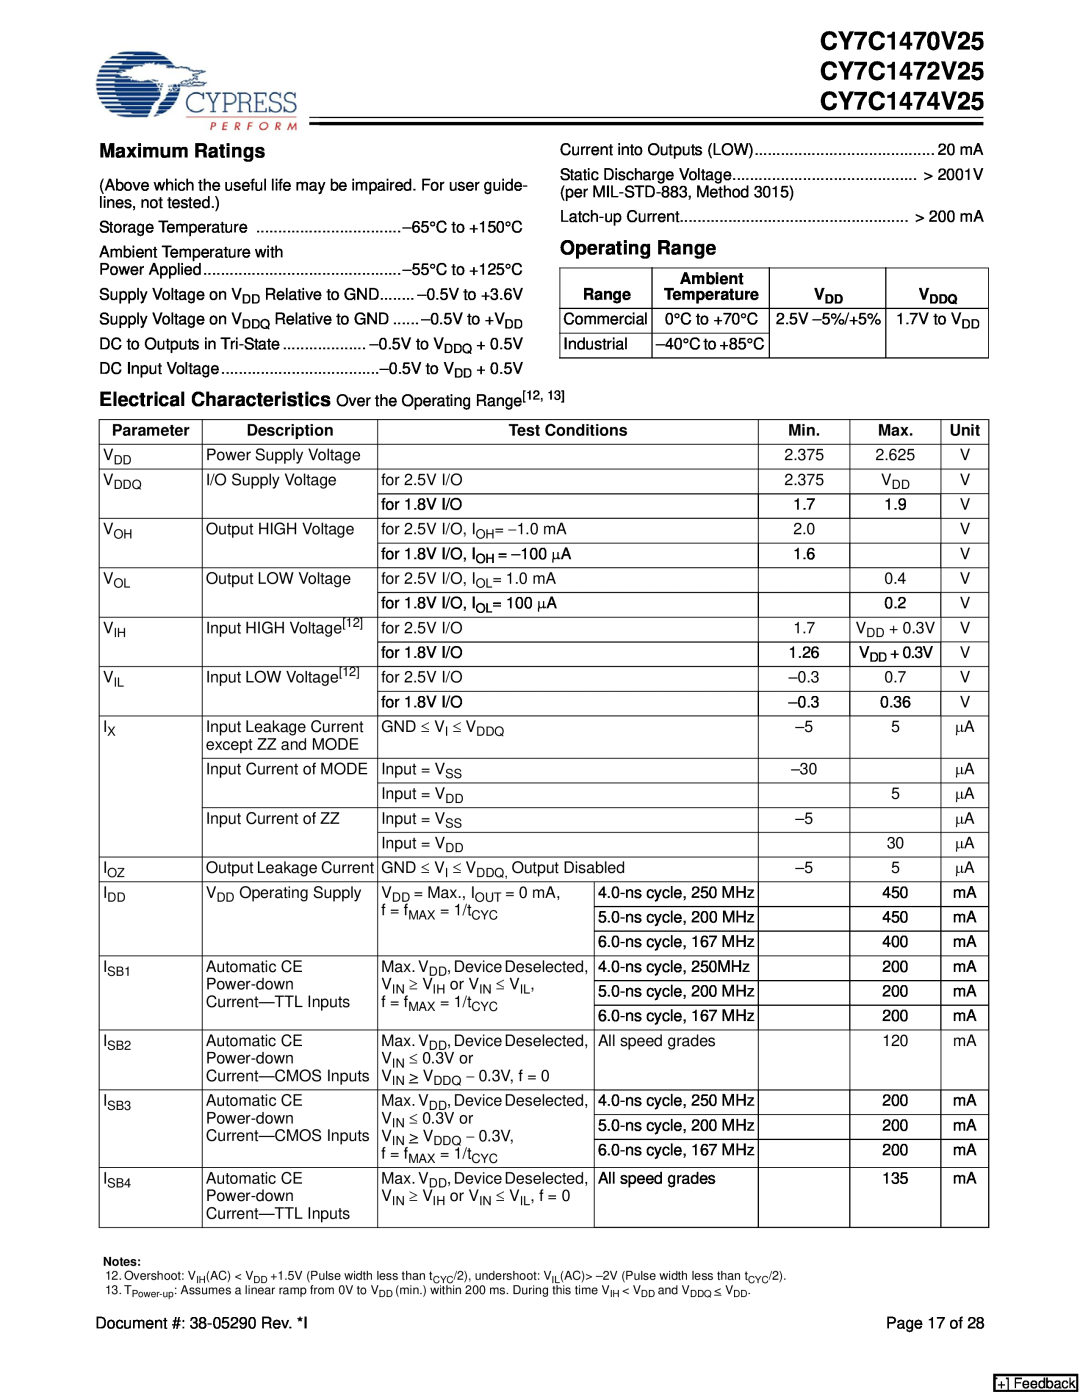 Cypress CY7C1472V25 manual Maximum Ratings, Electrical Characteristics Over the Operating Range12, Temperature, Vddq 